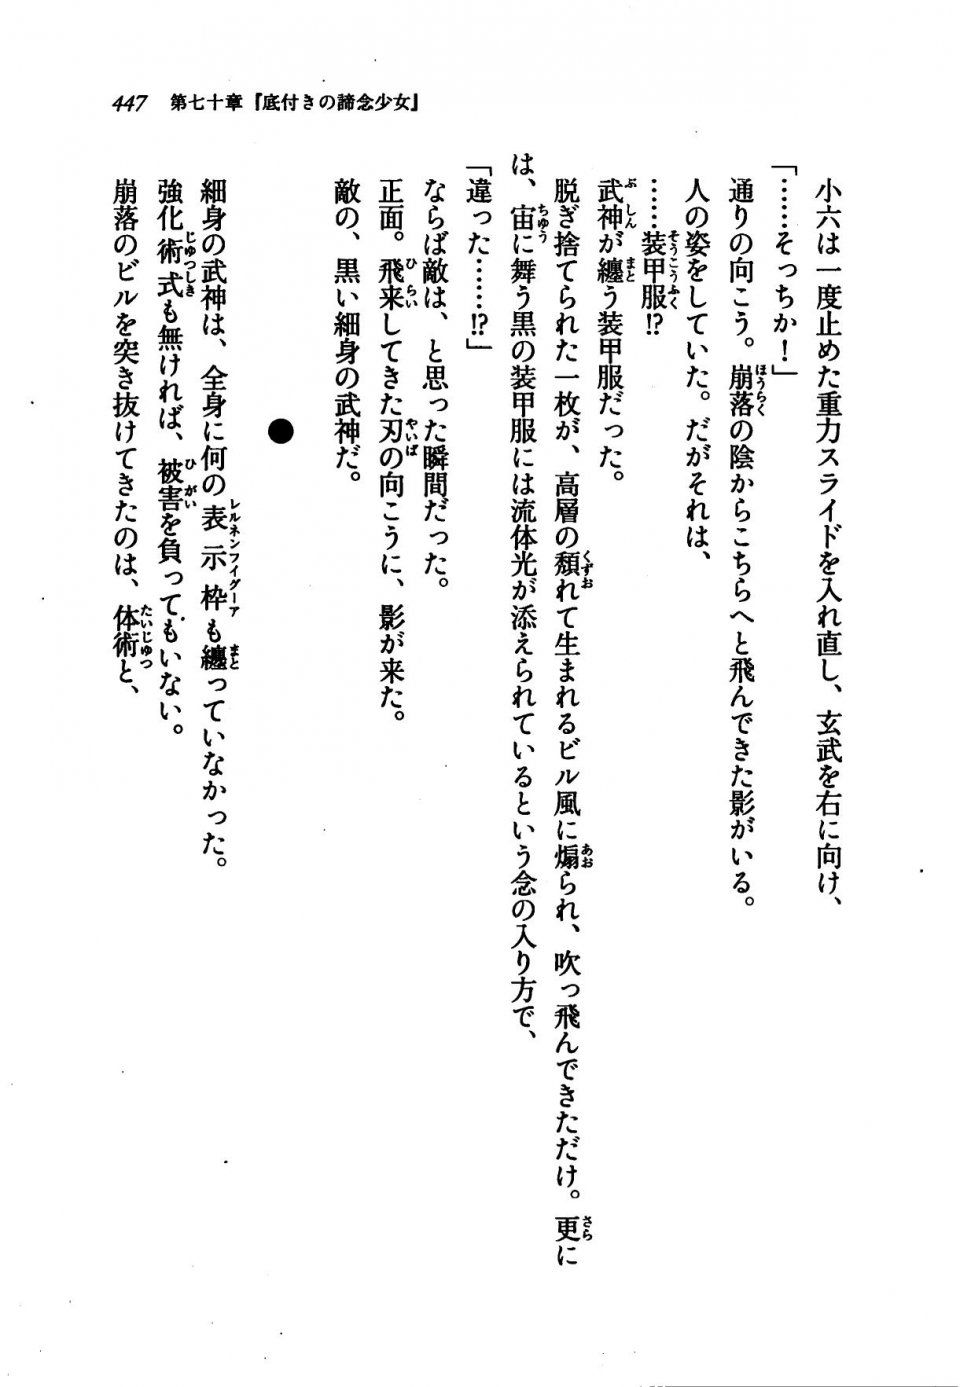 Kyoukai Senjou no Horizon LN Vol 21(8C) Part 1 - Photo #446